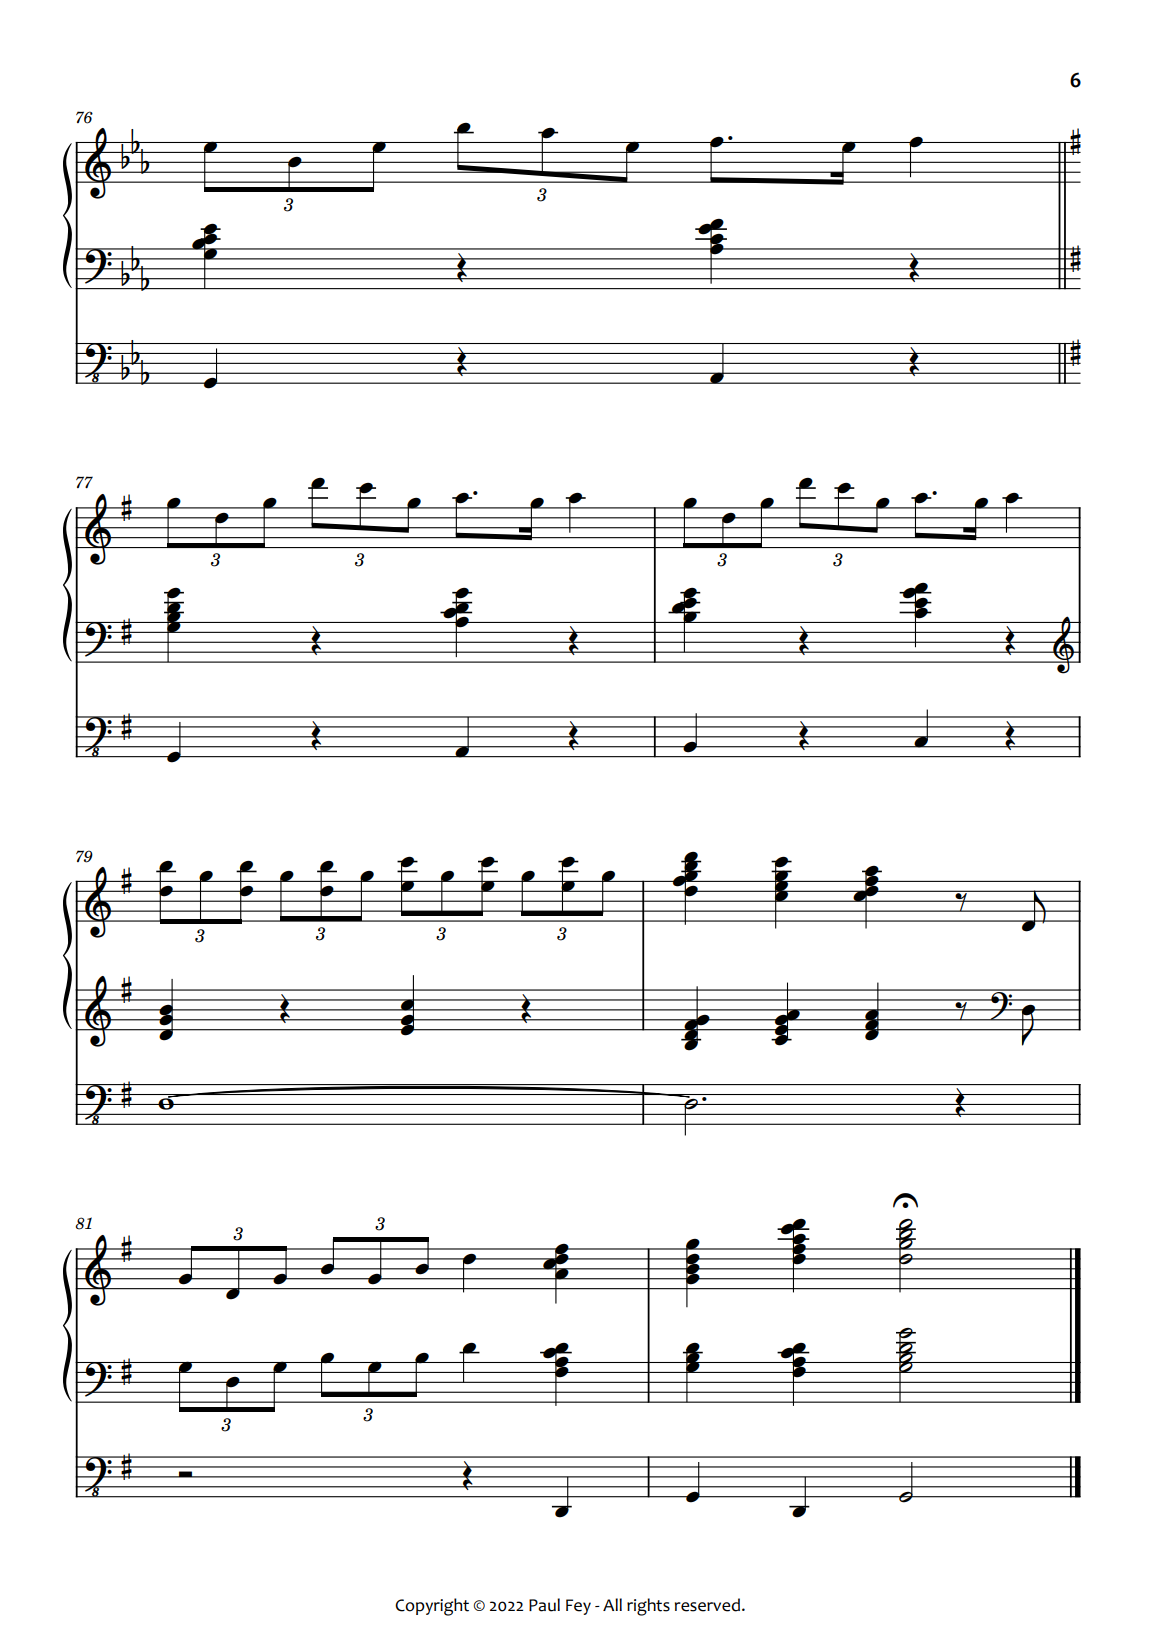 Organ Music Sheet by Paul Fey Organist